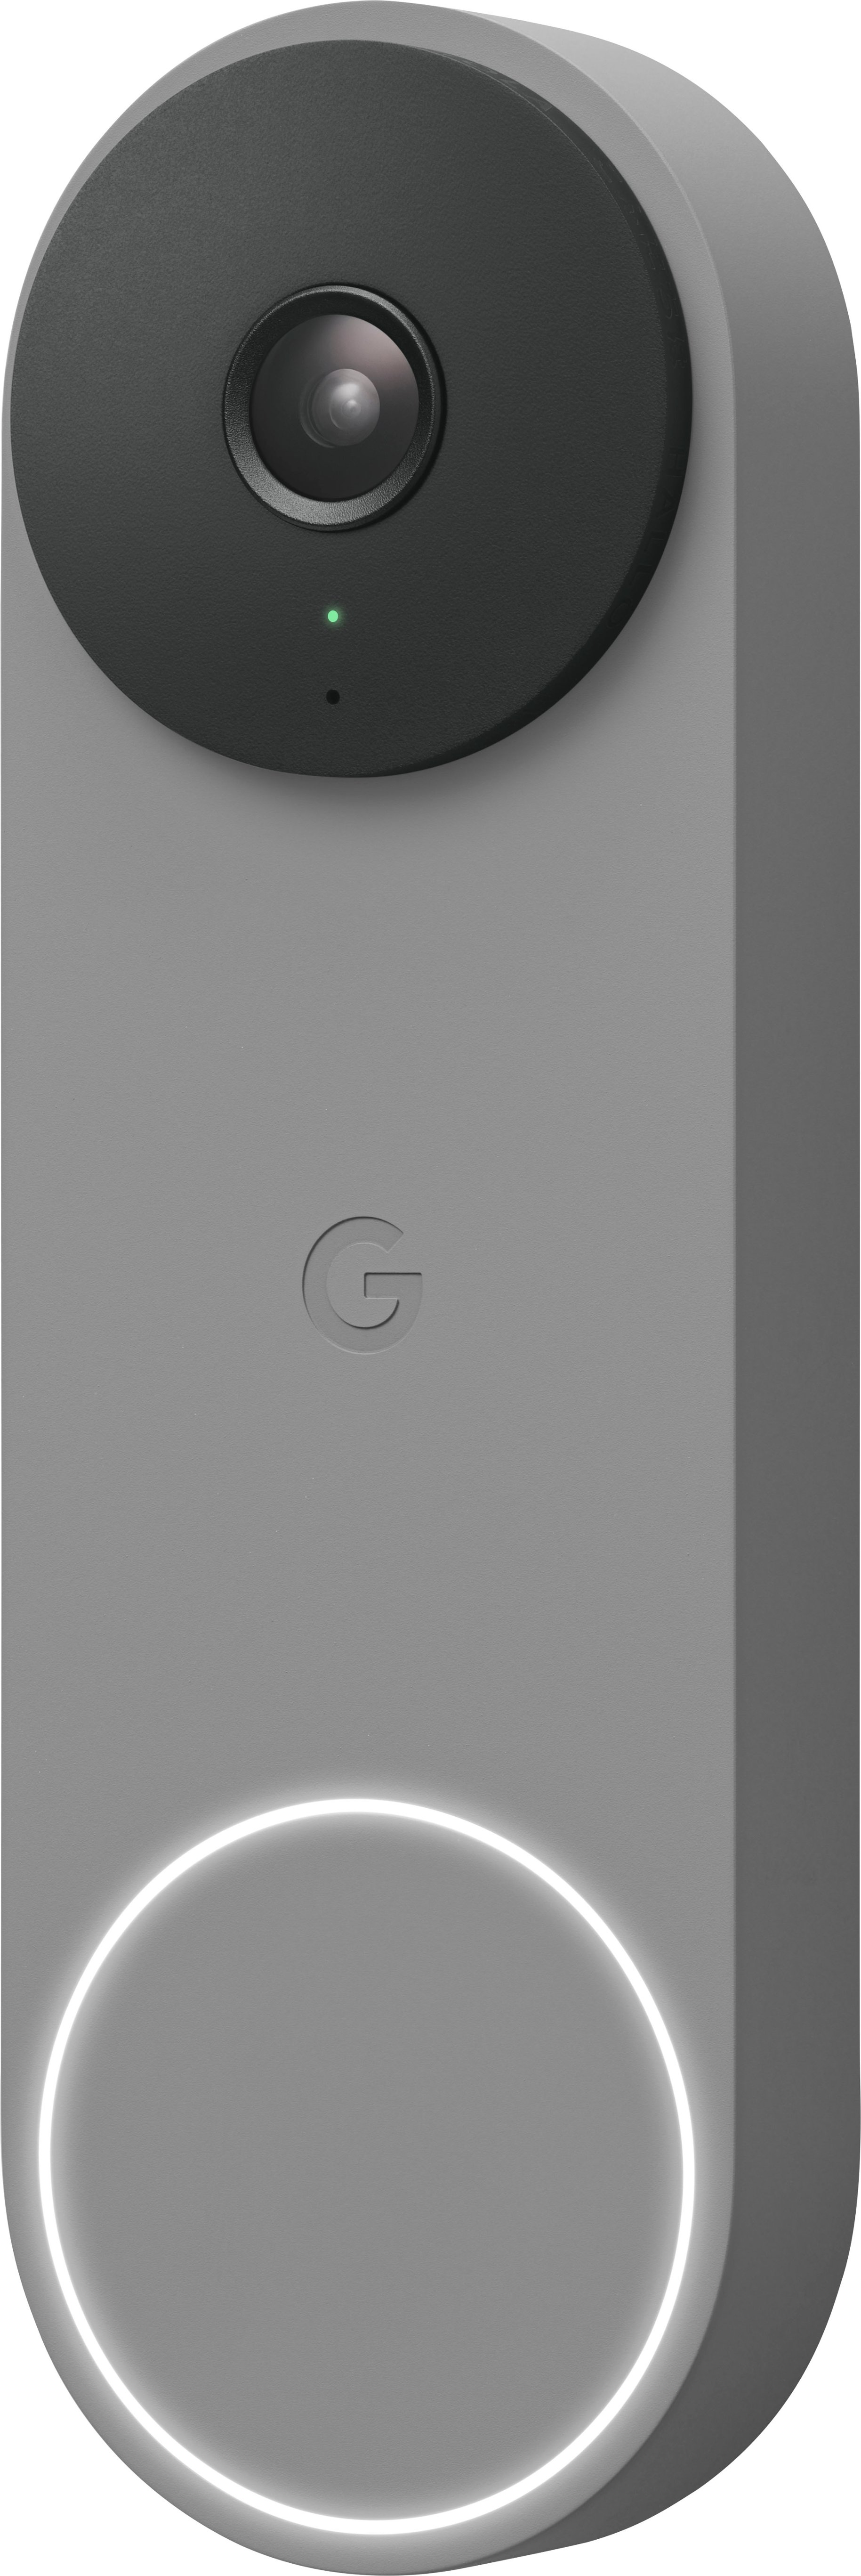 Google Nest Doorbell Wired (2nd Generation) Ash GA03696-US